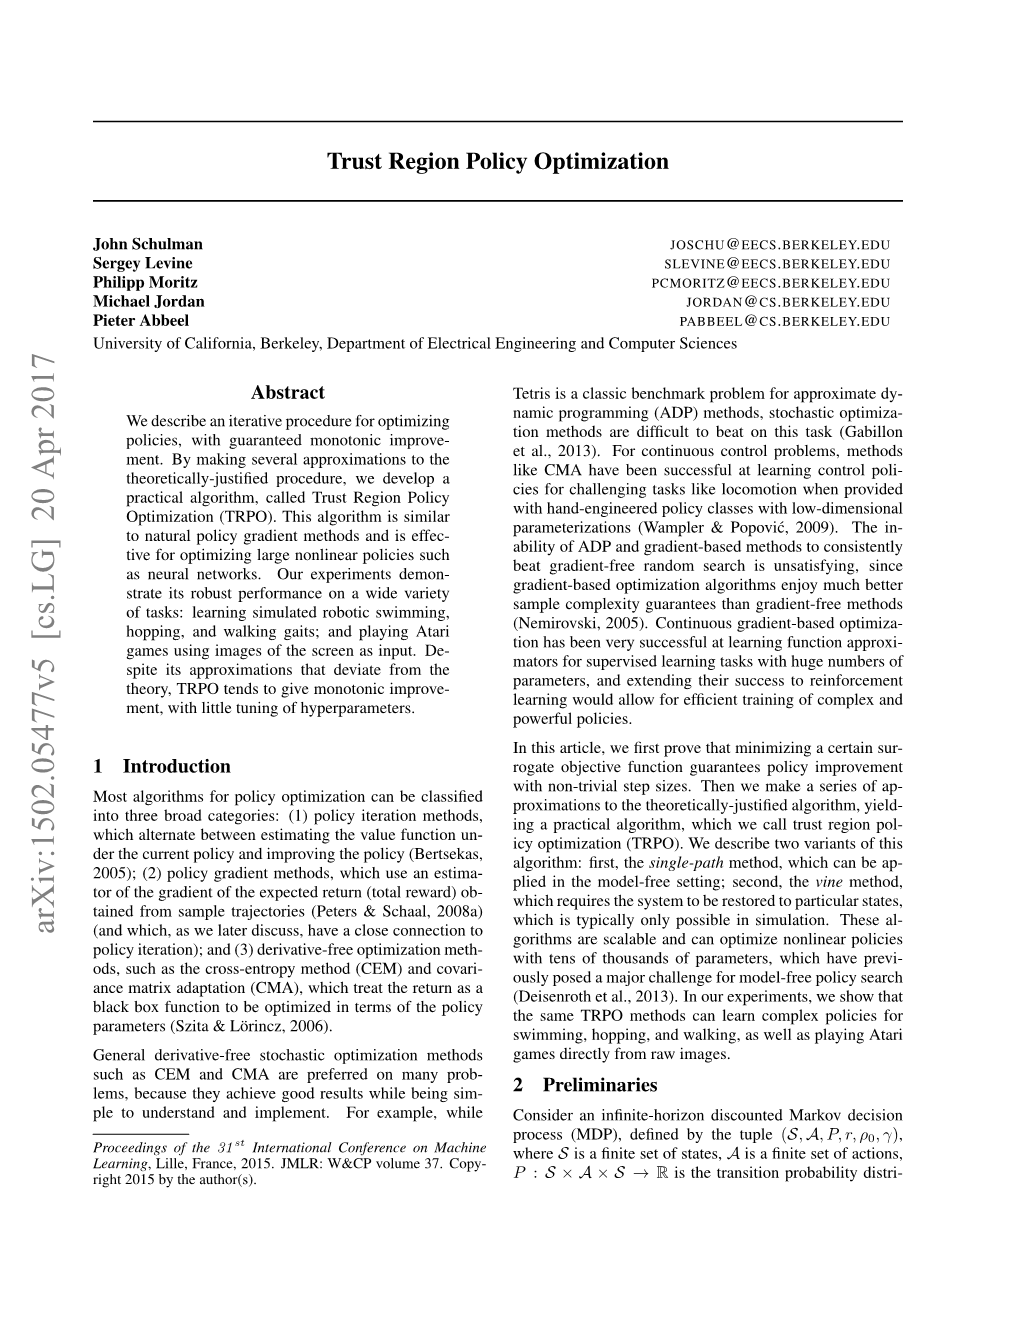 Trust Region Policy Optimization (TRPO)